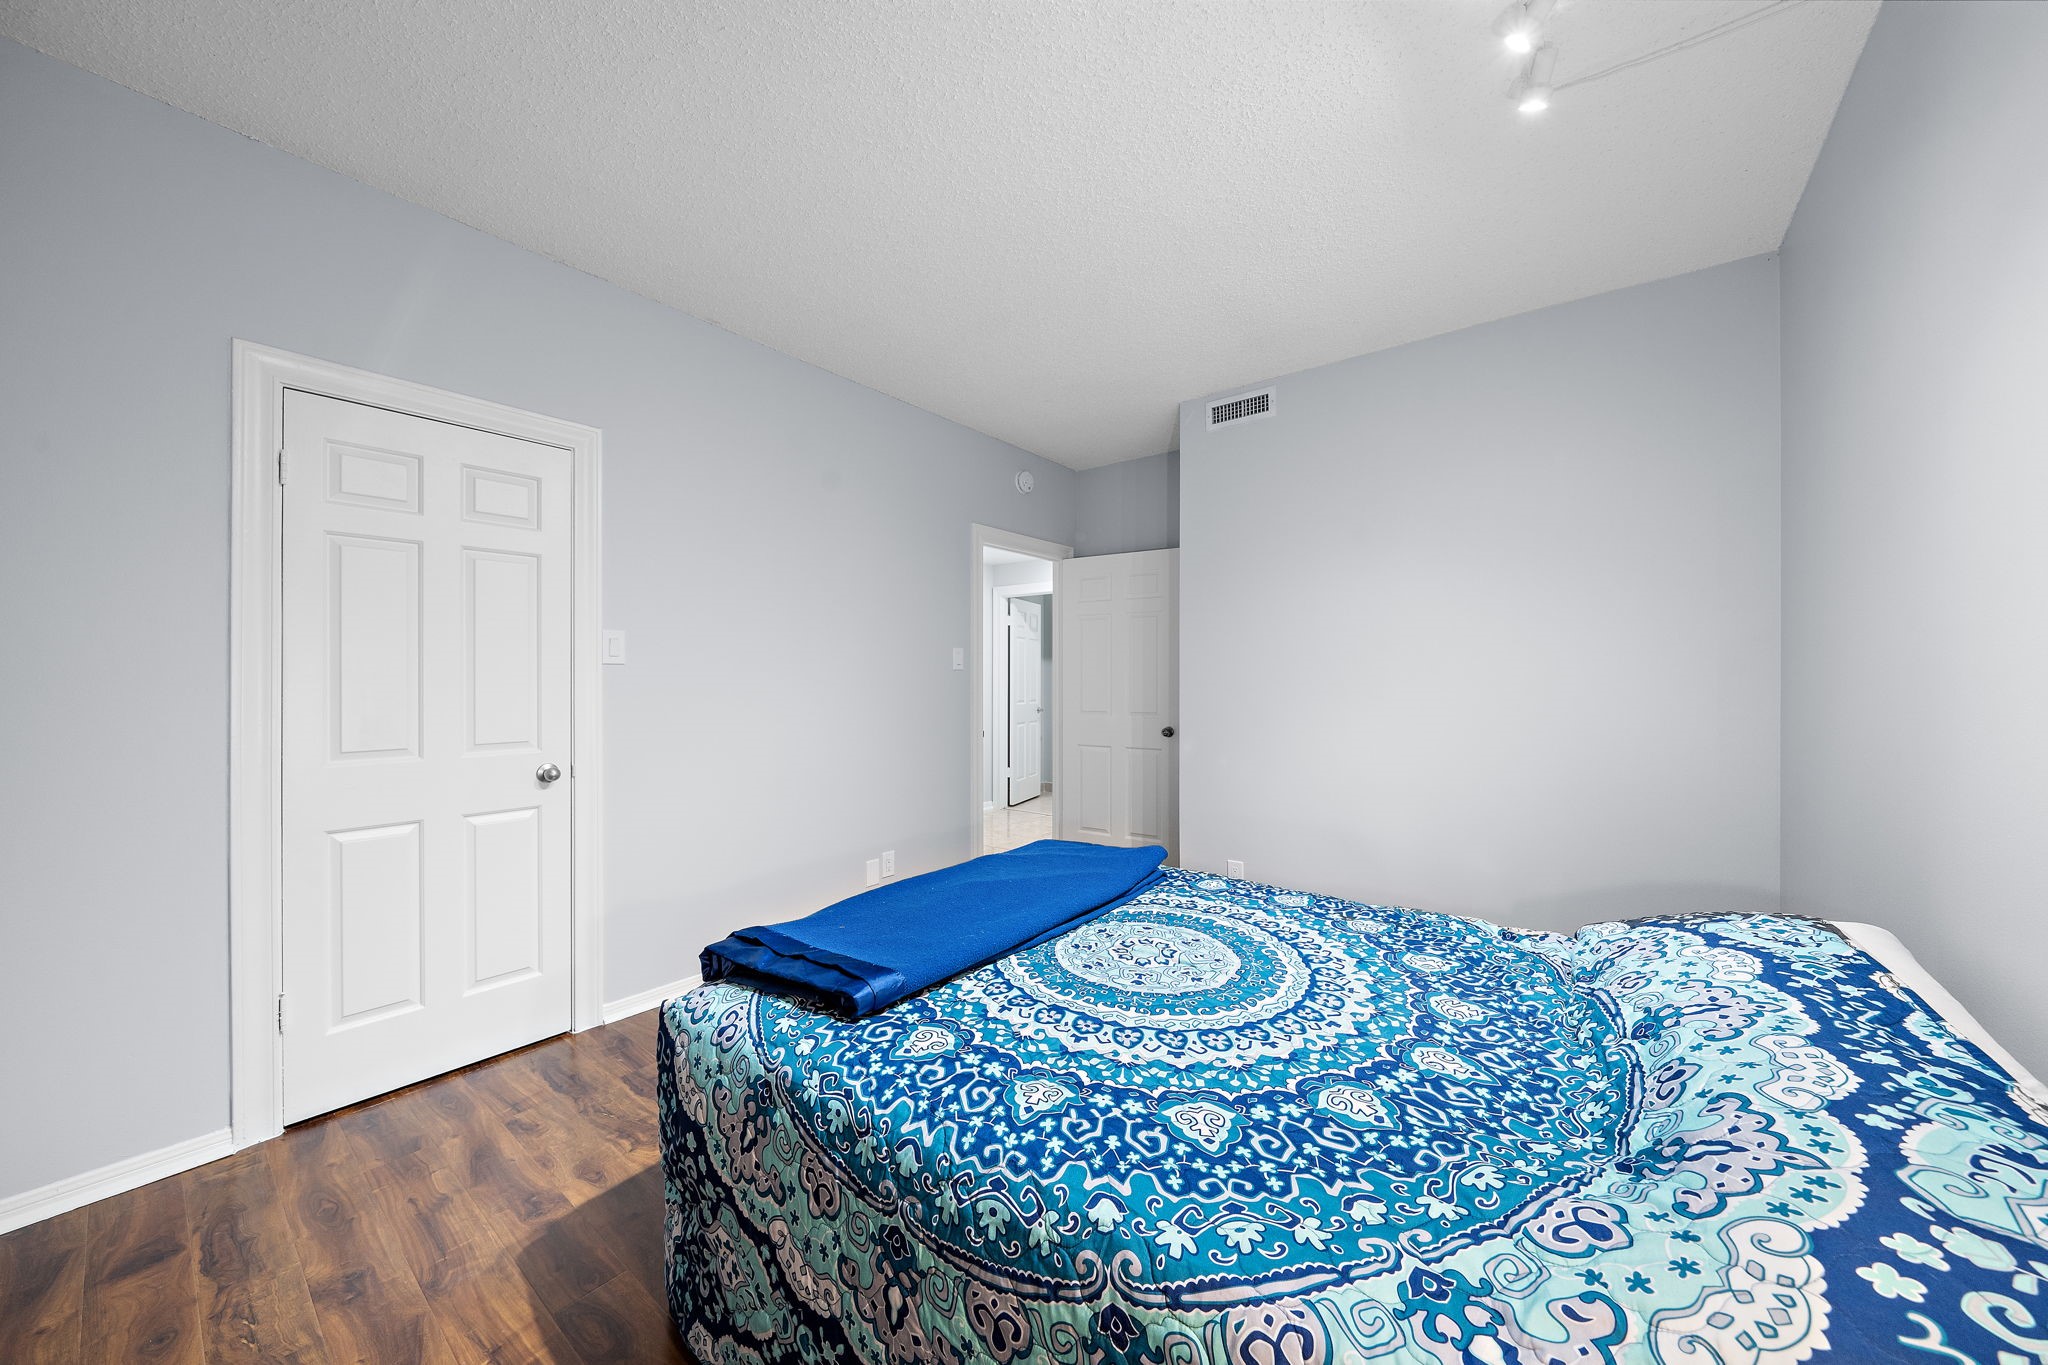 Bedroom featuring hardwood flooring, gray walls, recessed lighting, and two white doors.